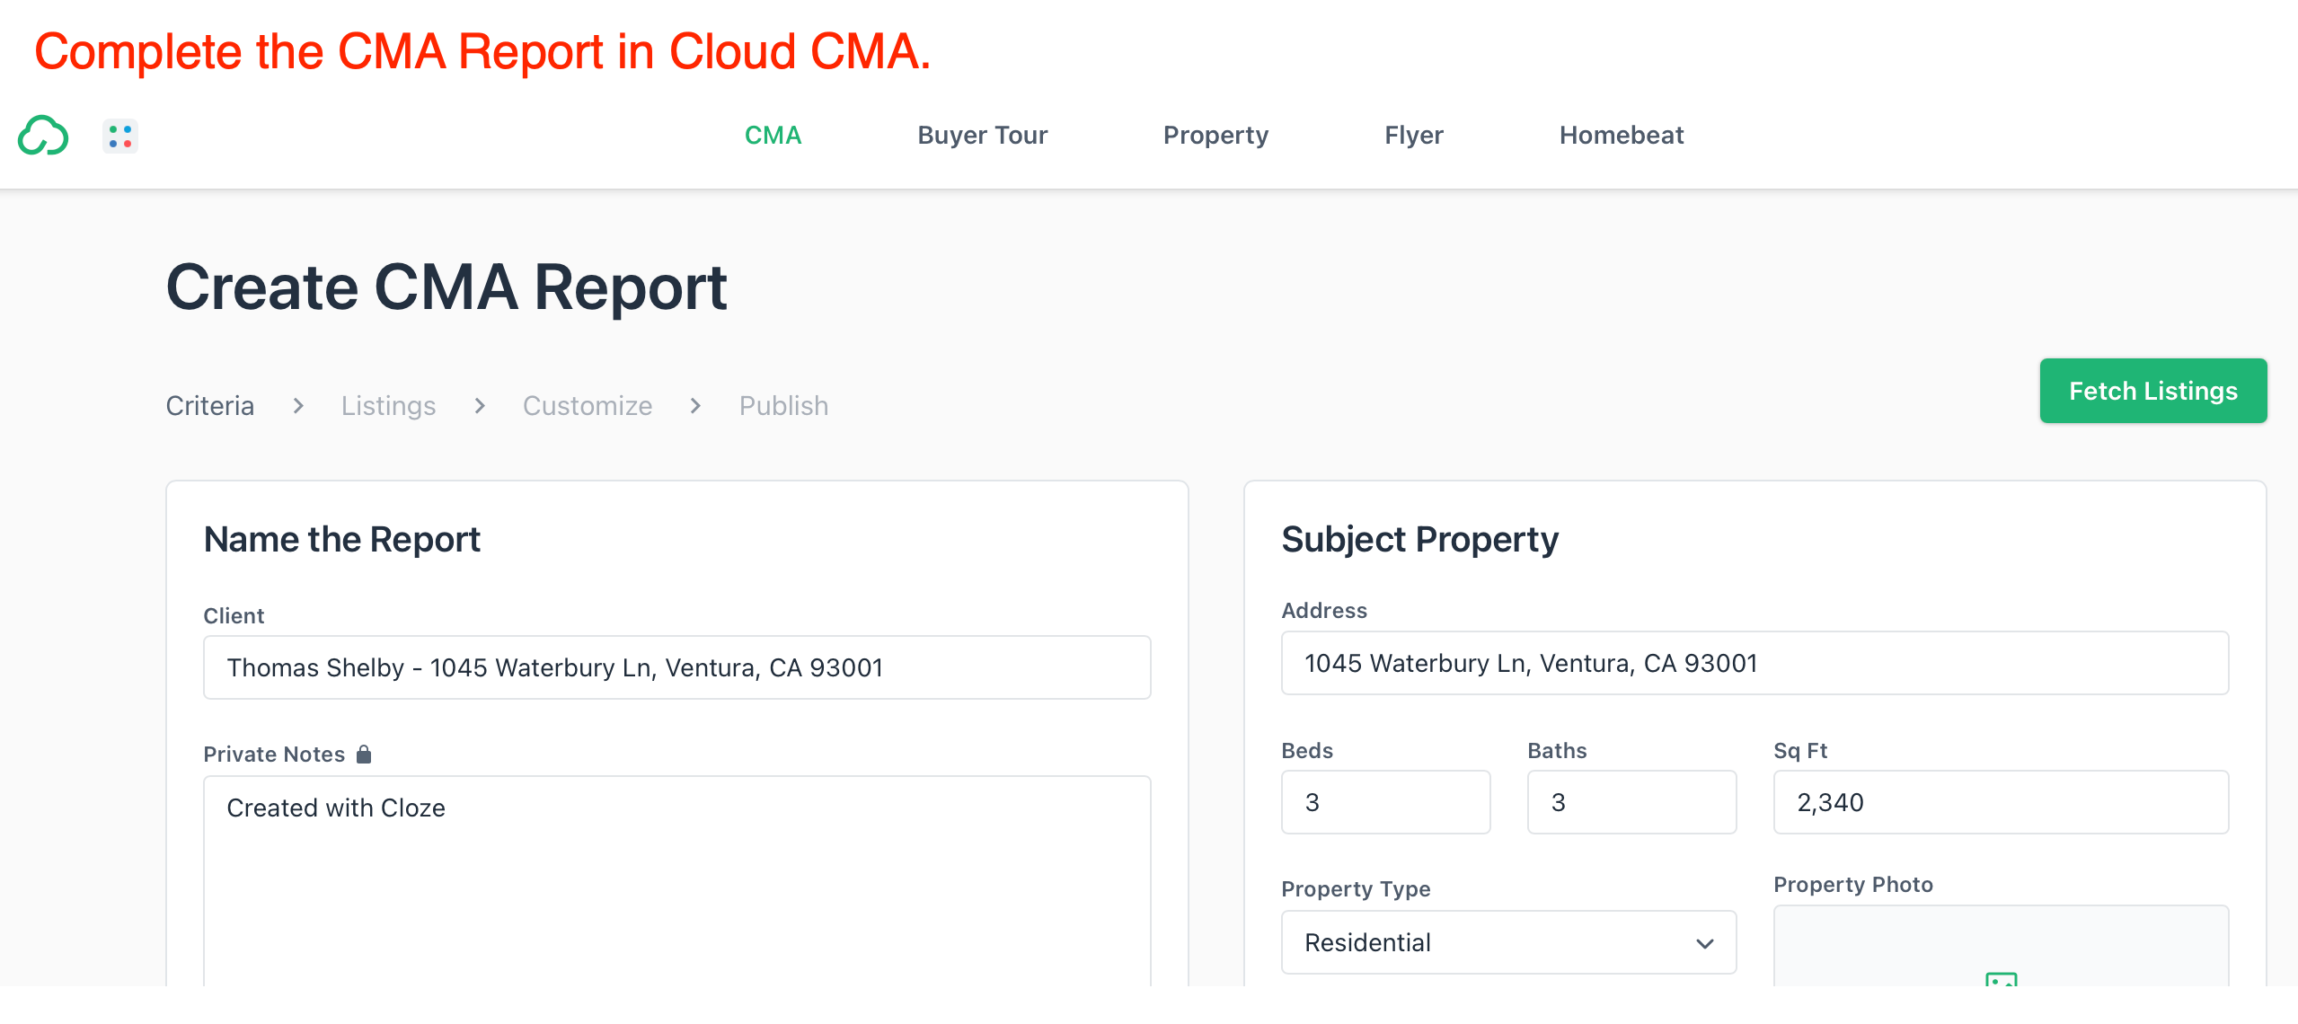 Complete the CMA report in Cloud CMA.